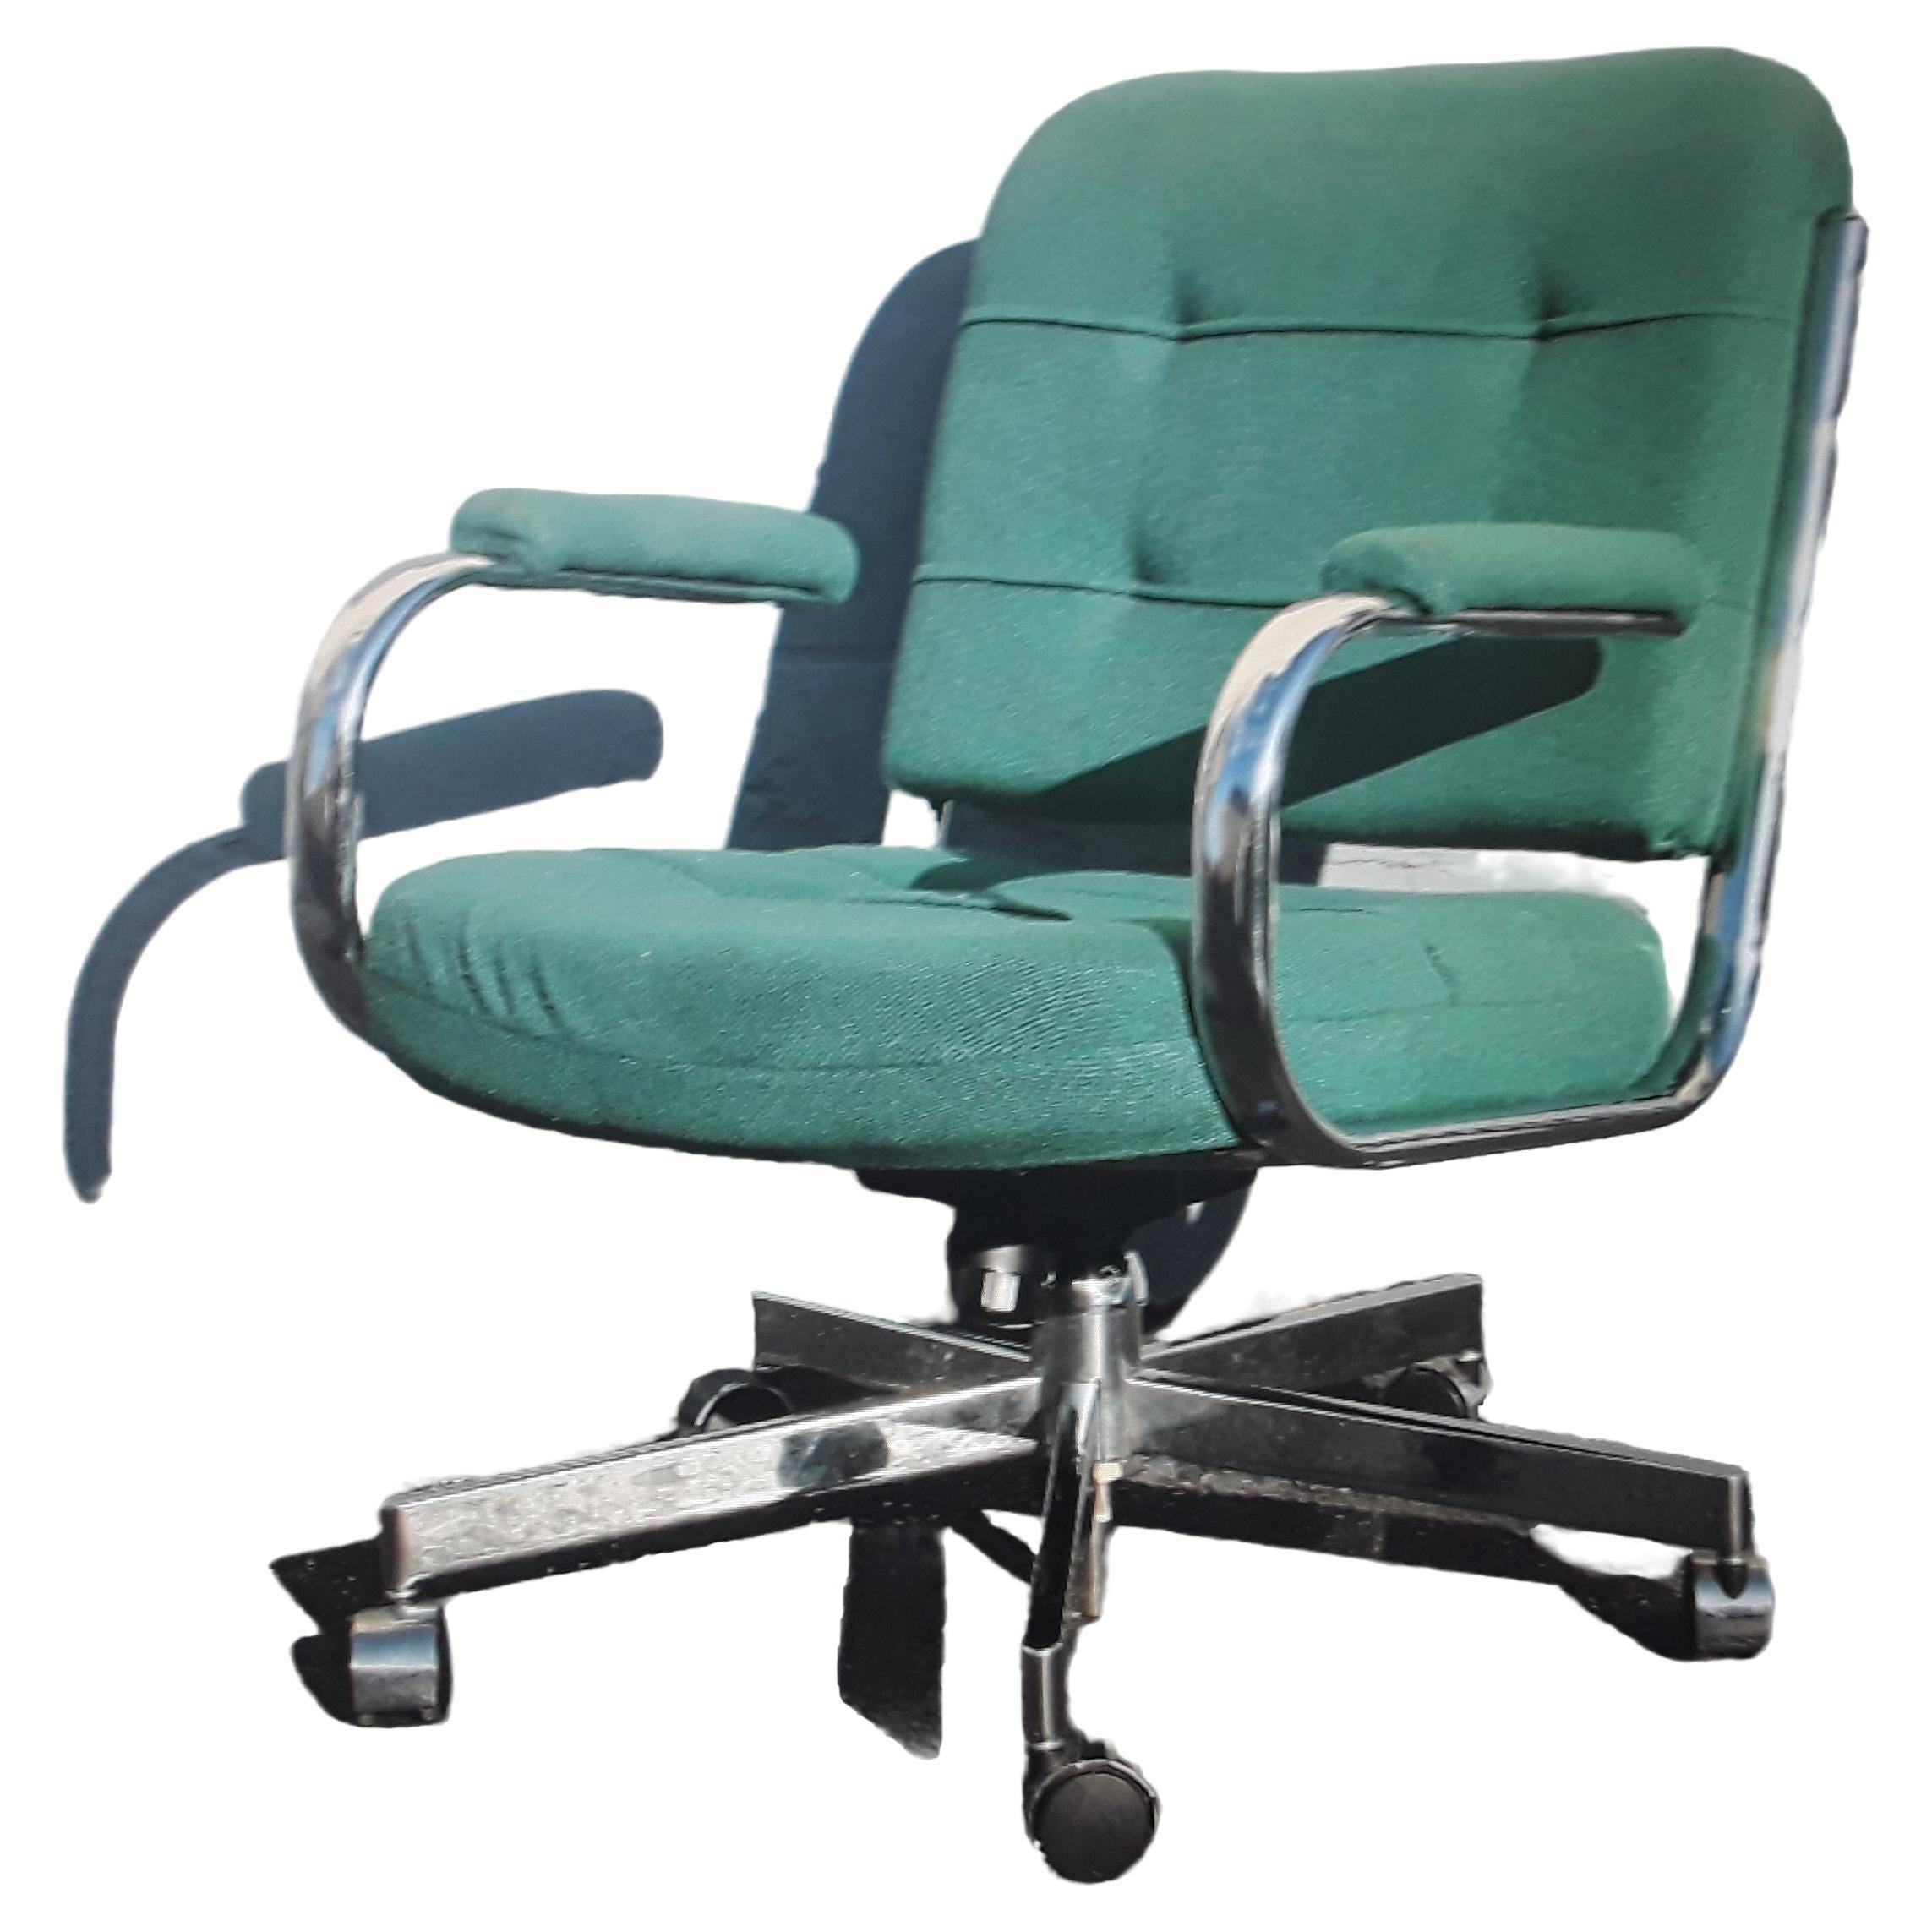 1970's Ultra Modern Adjustable Office Desk Chair